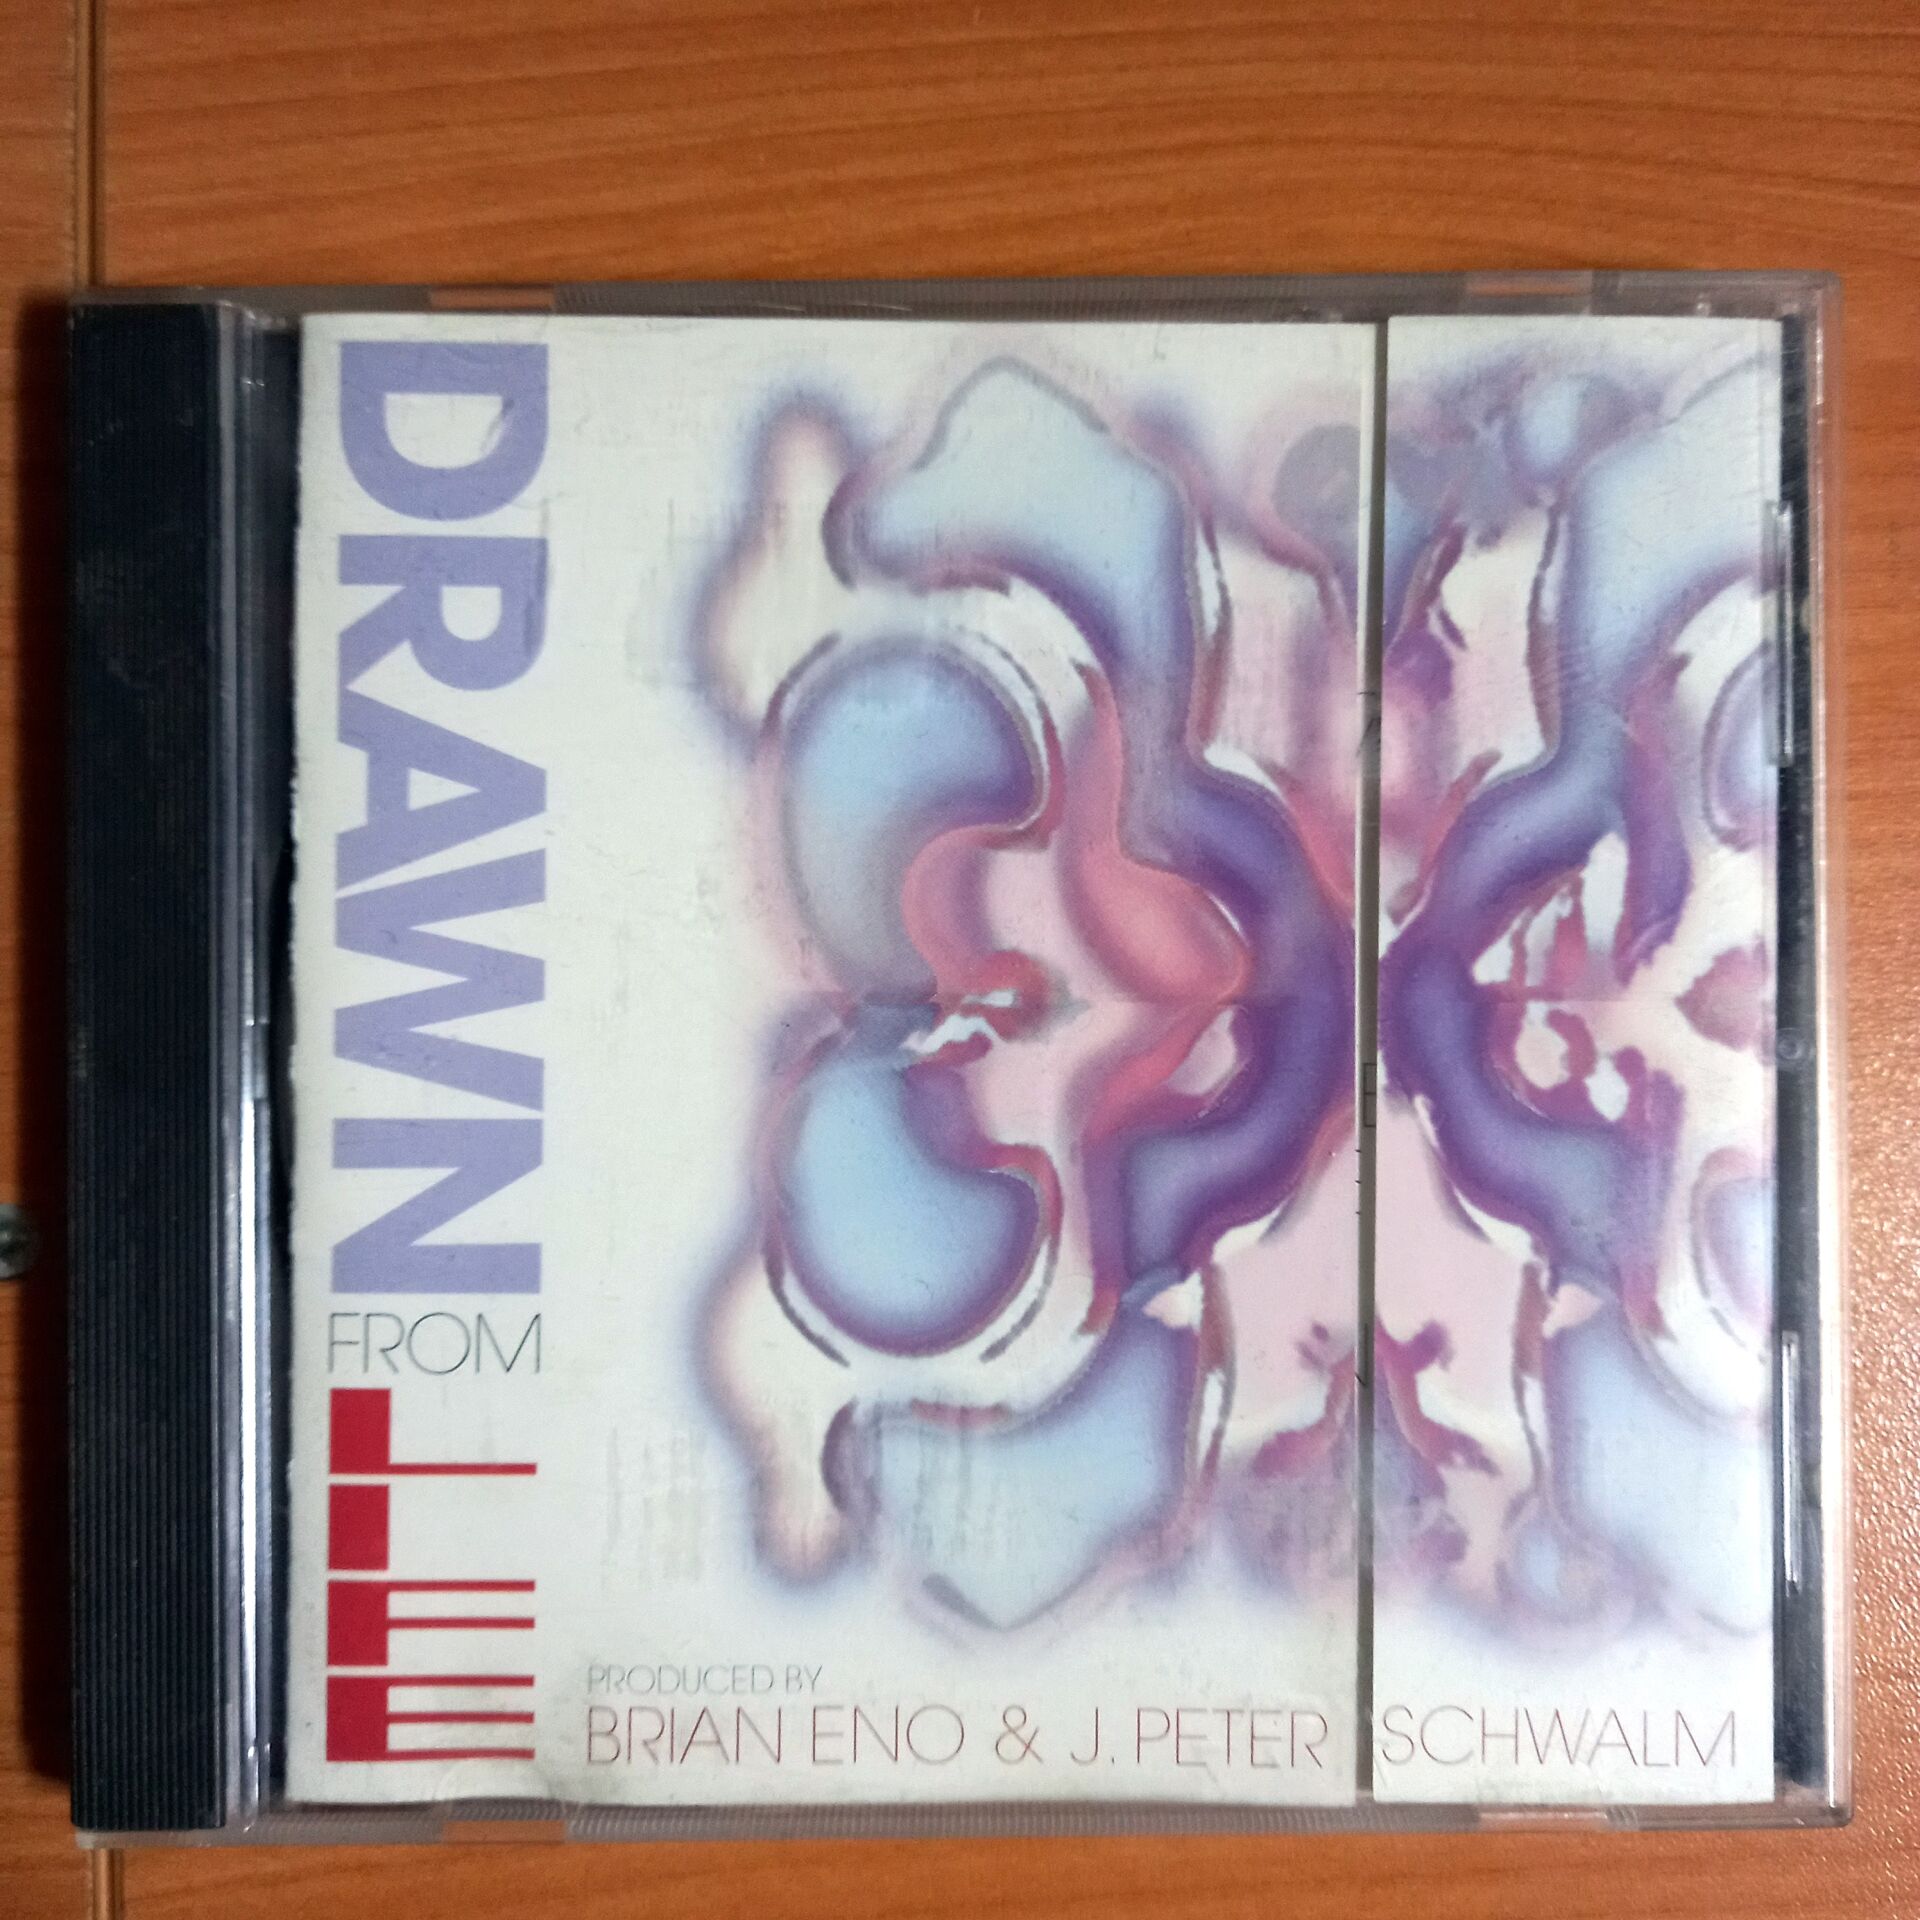 BRIAN ENO & J. PETER SCHWALM – DRAWN FROM LIFE (2001) - CD 2.EL